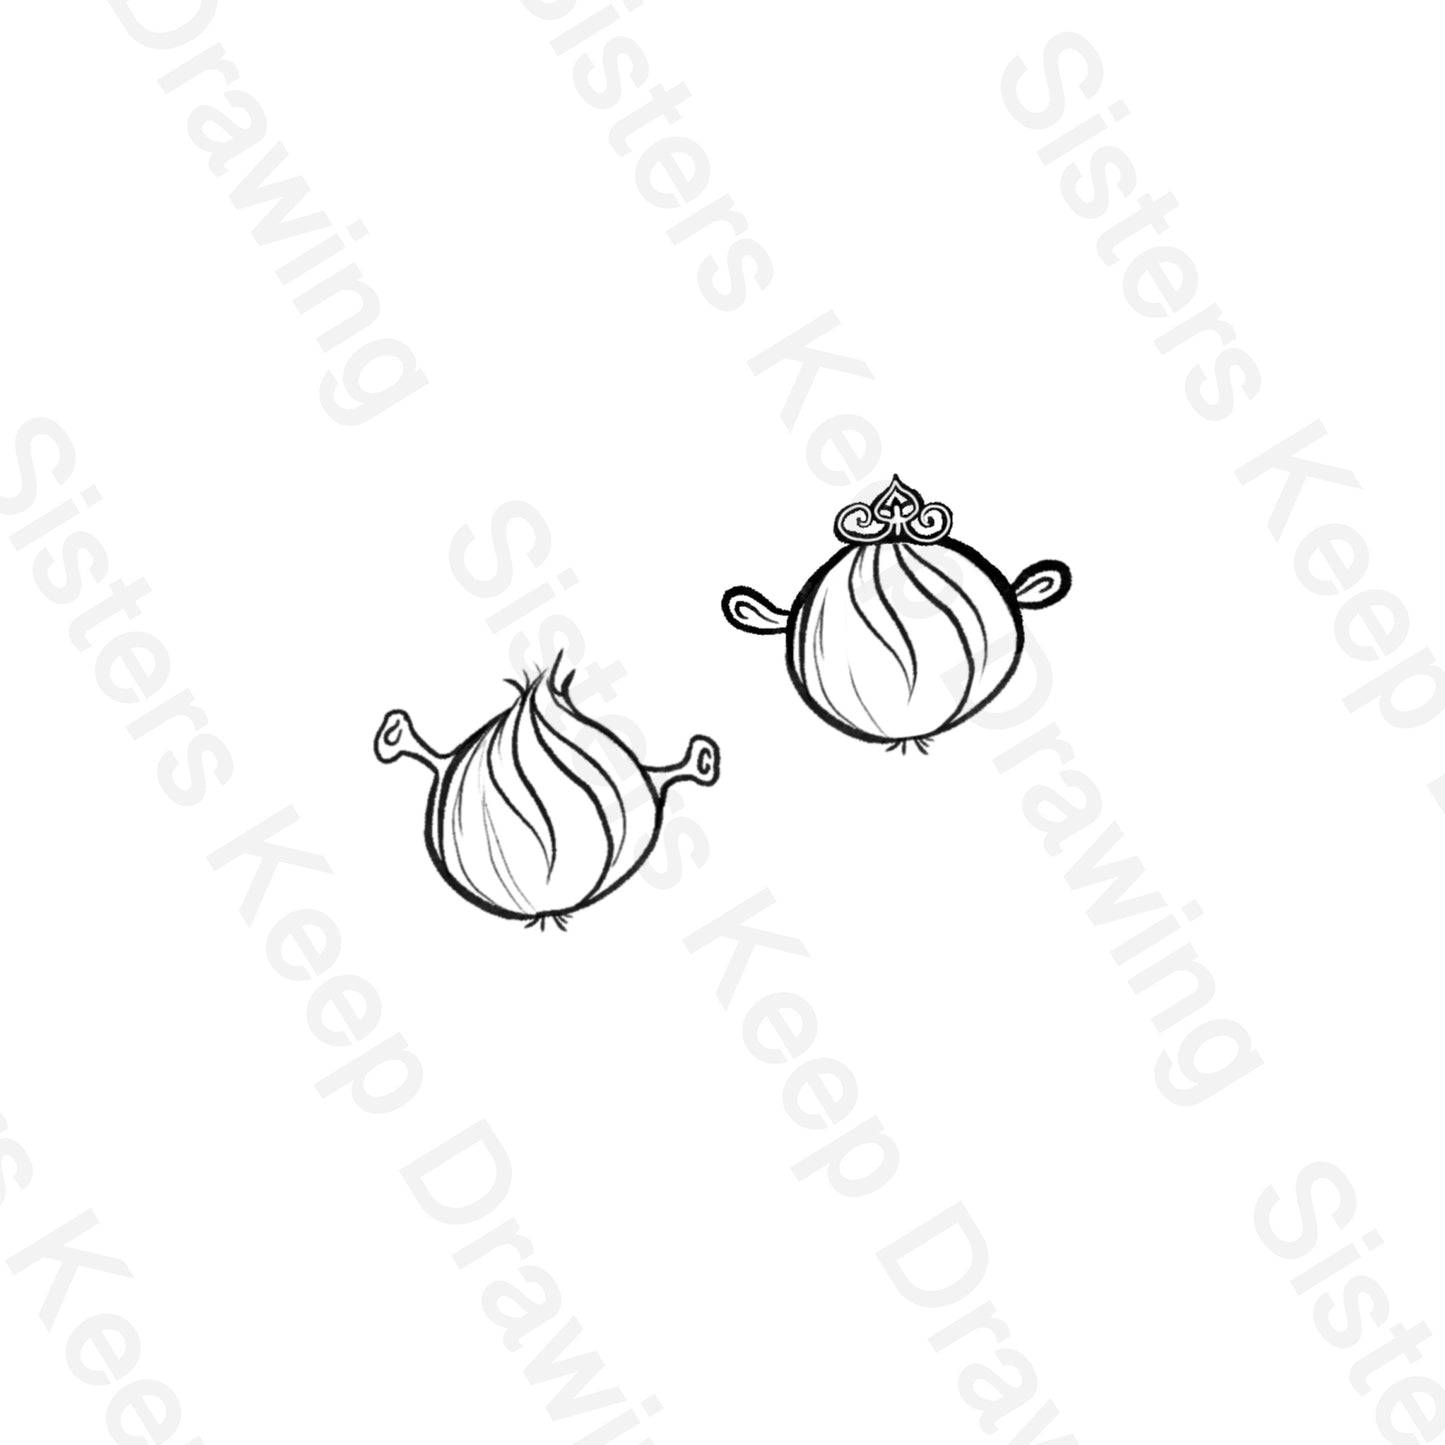 Shrek onions - Tattoo Transparent Permission PNG- instant download digital printable artwork